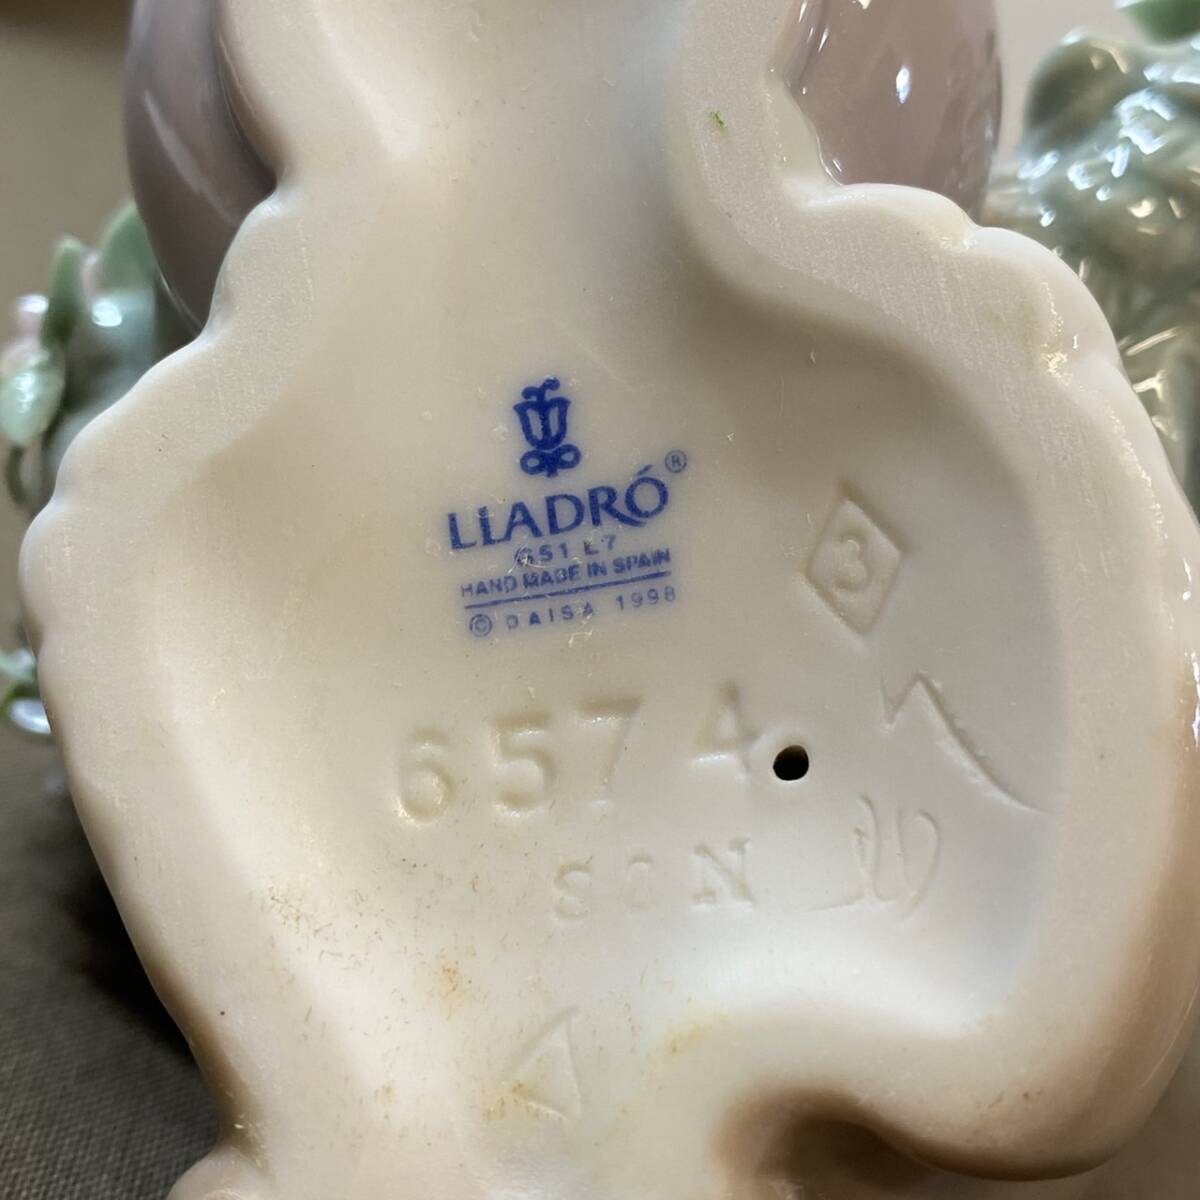 【MH-7239】中古品 LLADRO リヤドロ お花が大好き 6574 犬 陶器 フィギュリン 西洋陶器 人形 西洋磁器 置物 インテリアの画像6